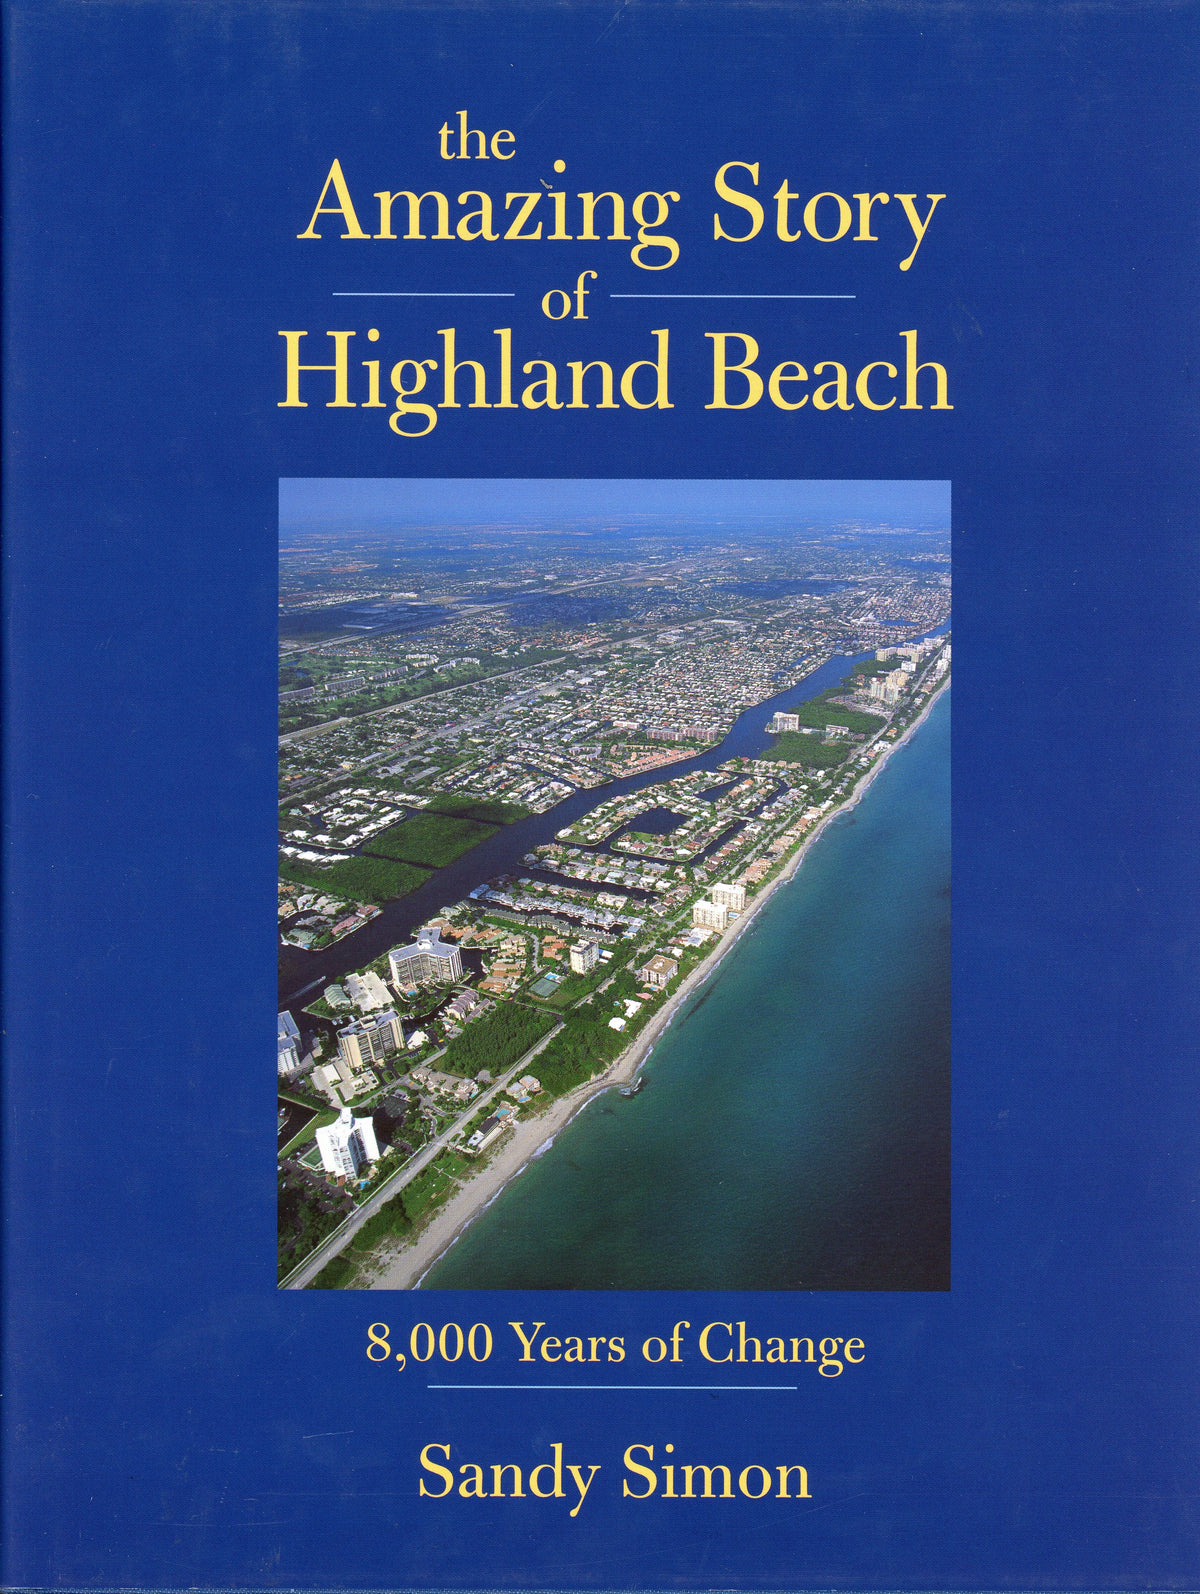 The Amazing Story of Highland Beach: 8,000 Years of Change